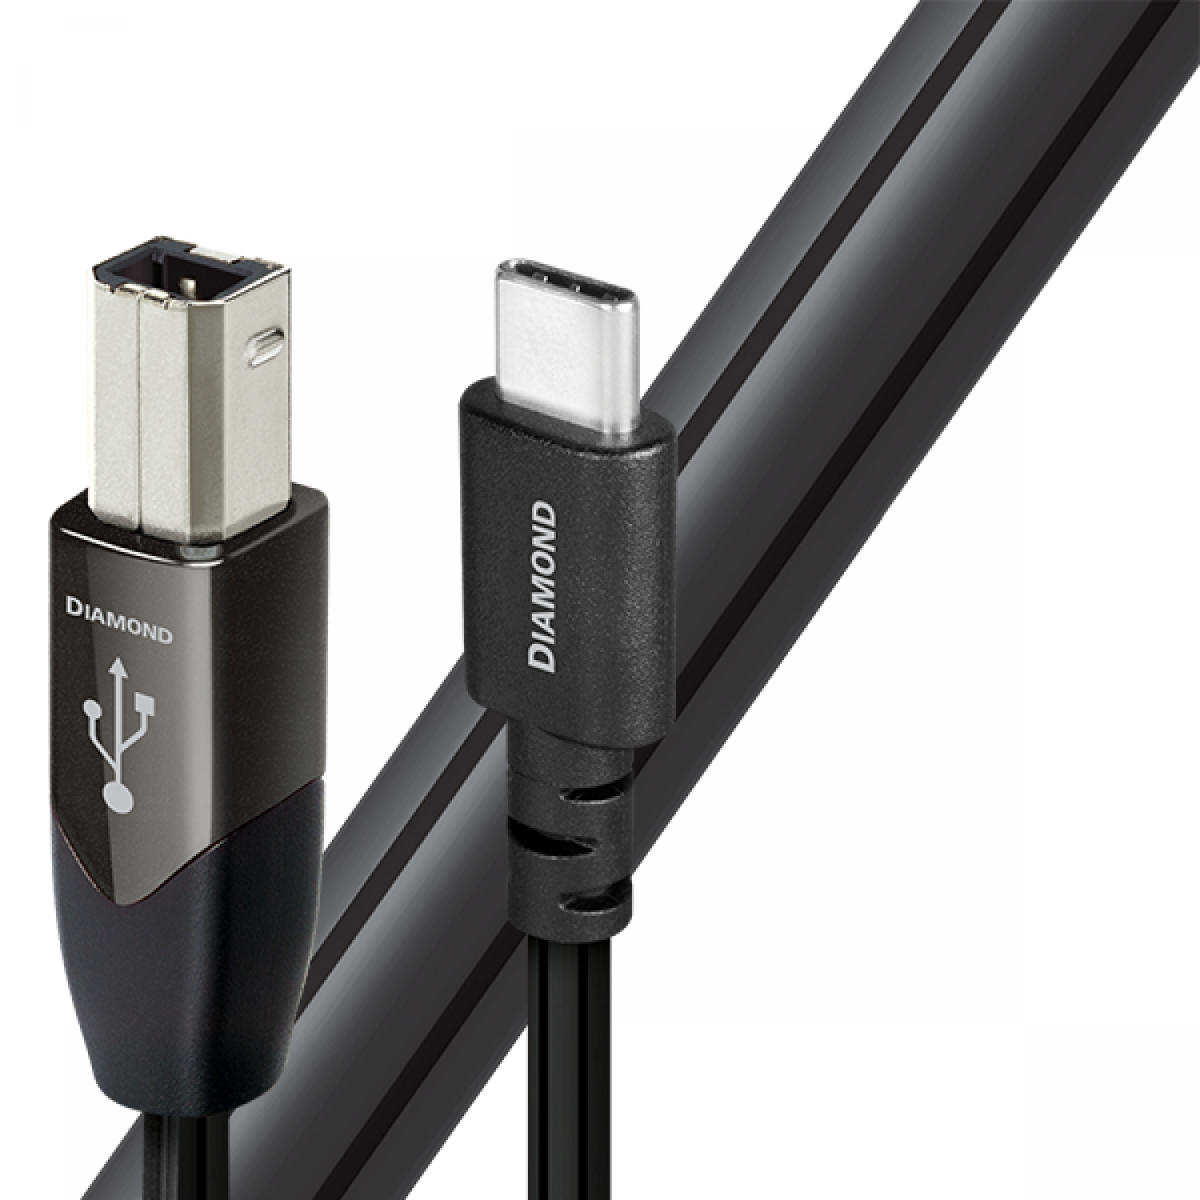 Audioquest Diamond USB 2.0 B to Type C Cable